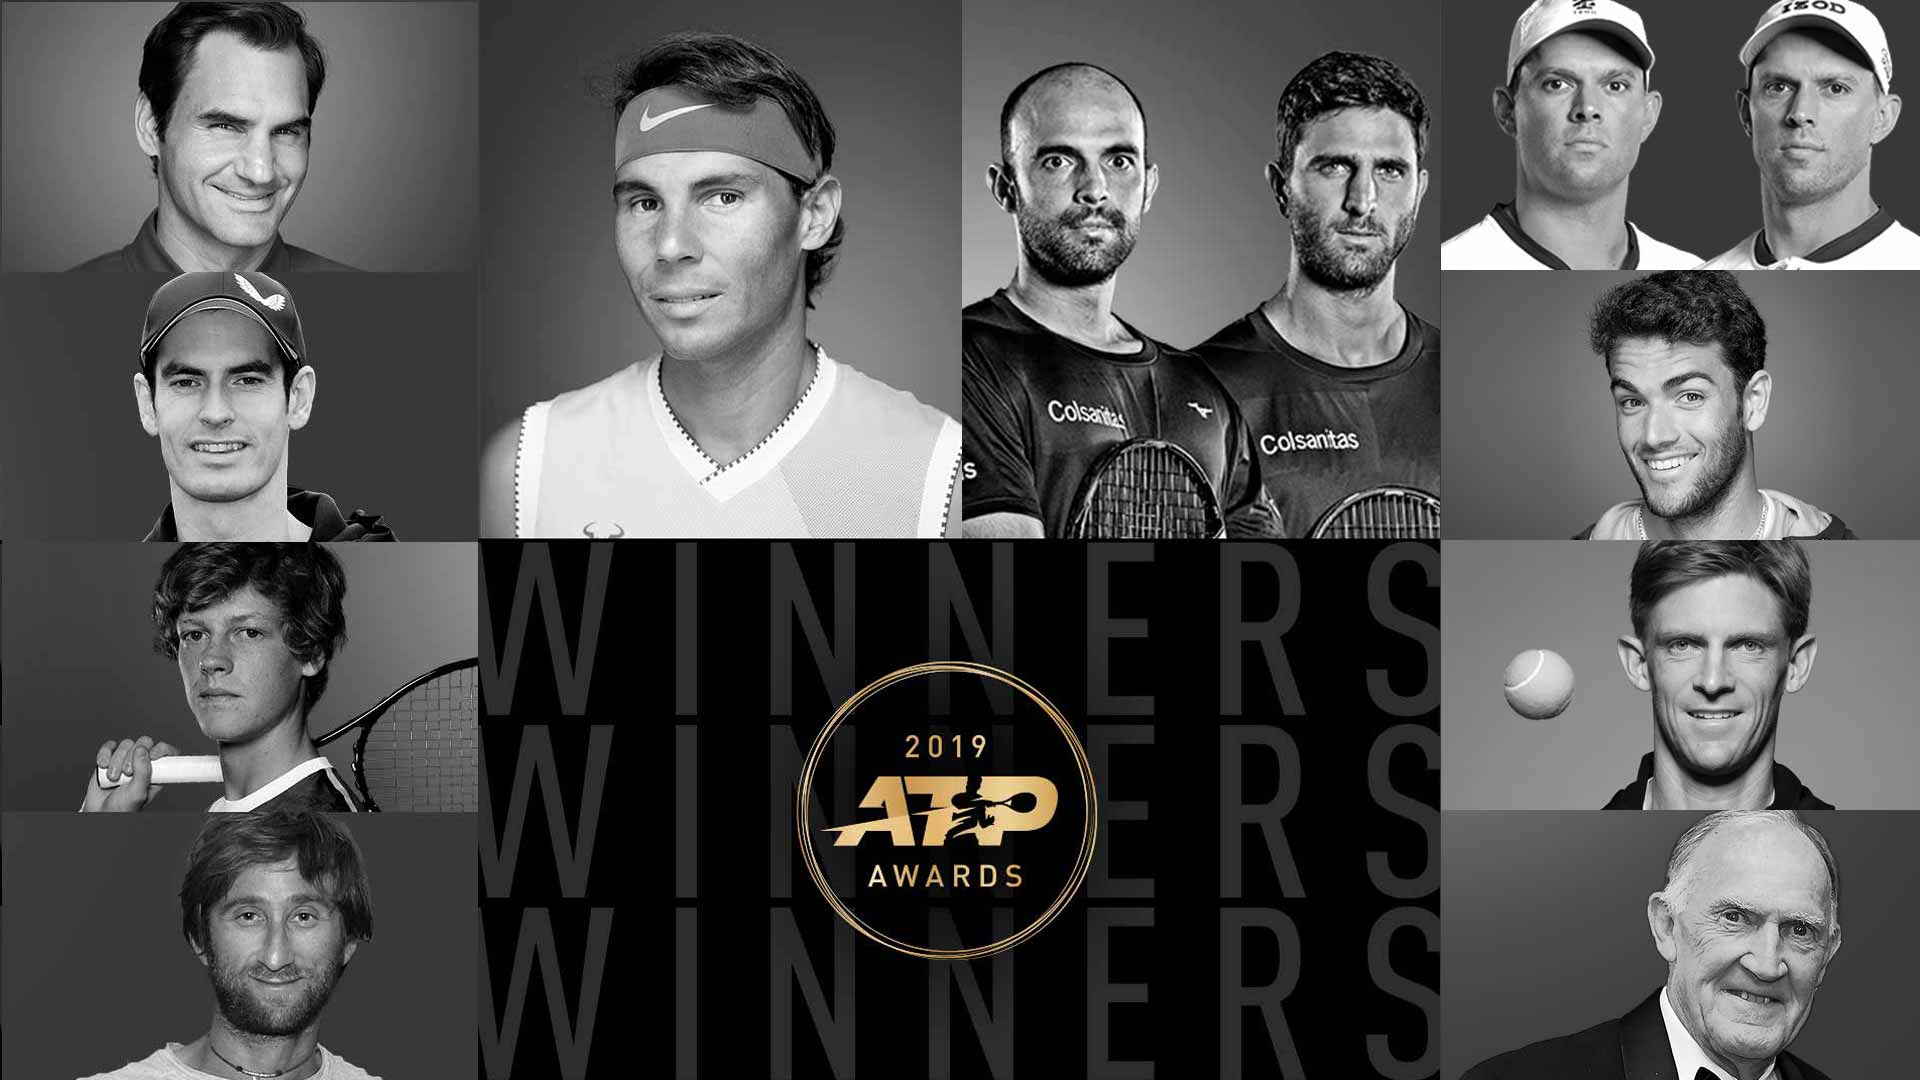 ATP Awards, ATP Tour